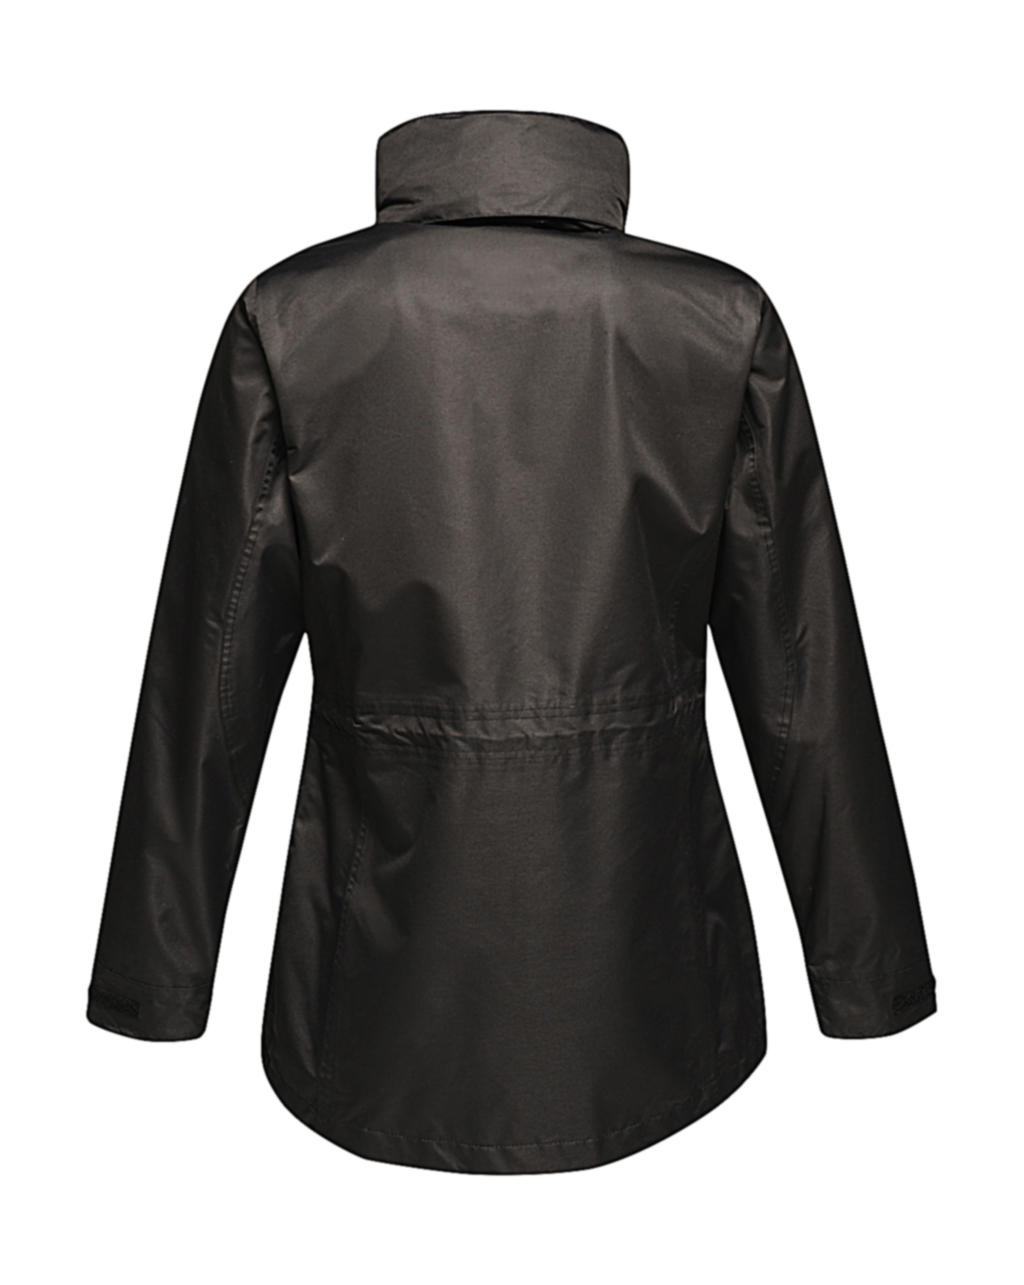  Womens Benson III Jacket in Farbe Black/Black